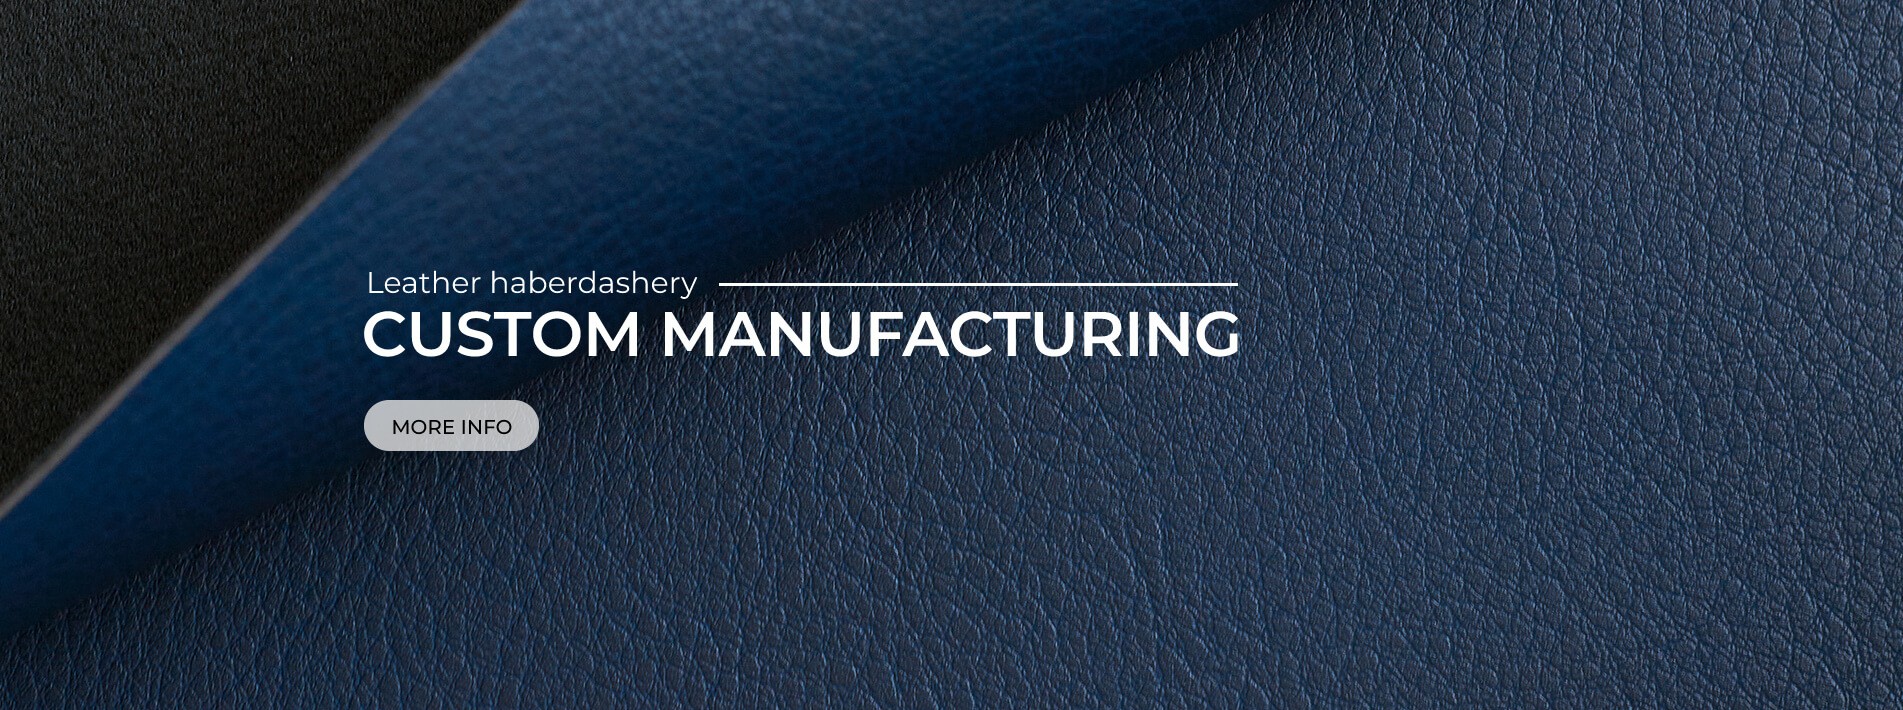 Custom manufacturing